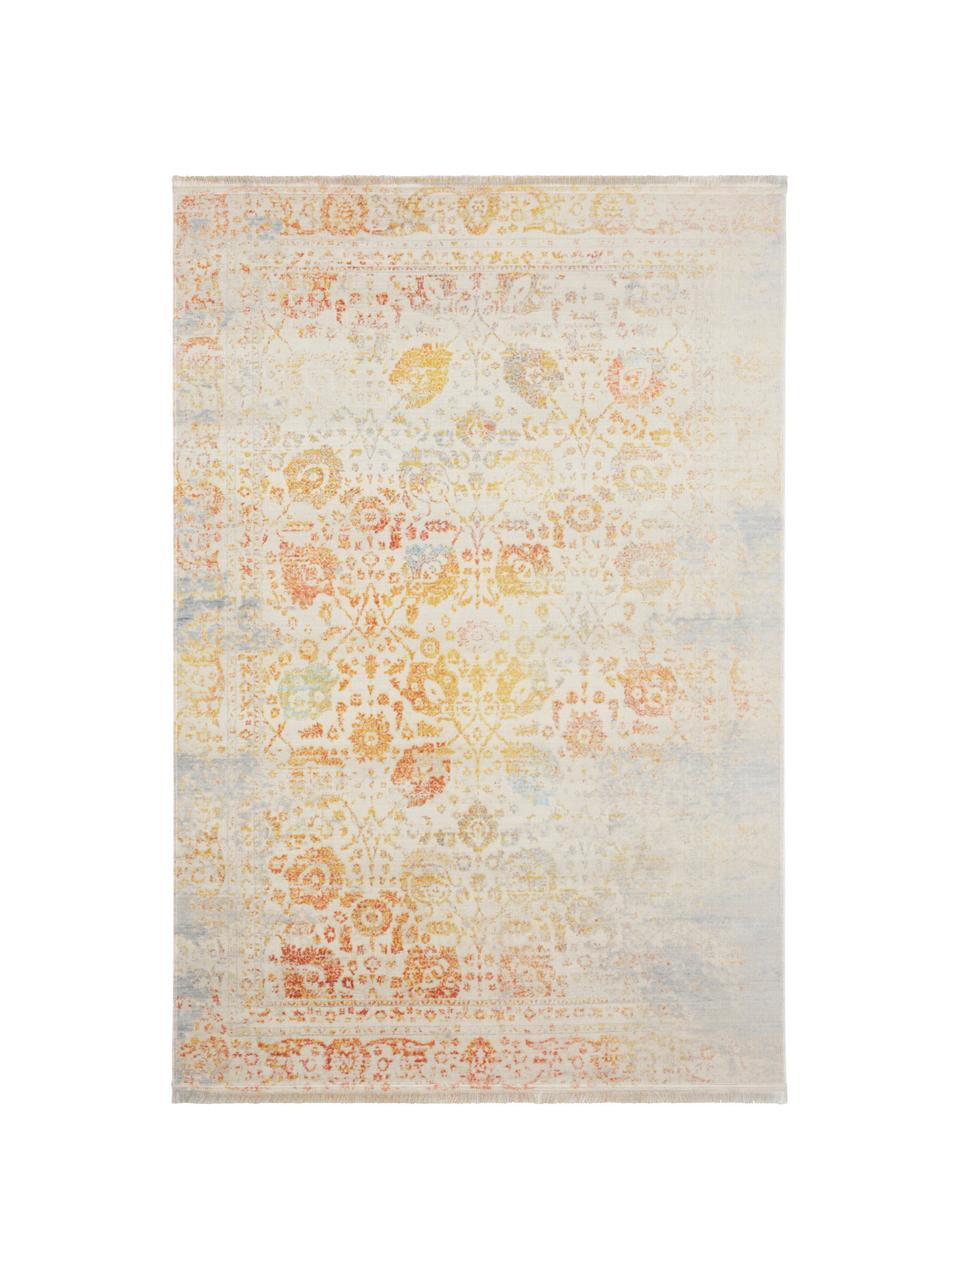 Vintage Teppich Menga mit bunten Ornamenten, Flor: 60% Polyester, 40% Baumwo, Mehrfarbig, B 180 x L 280 cm (Grösse M)